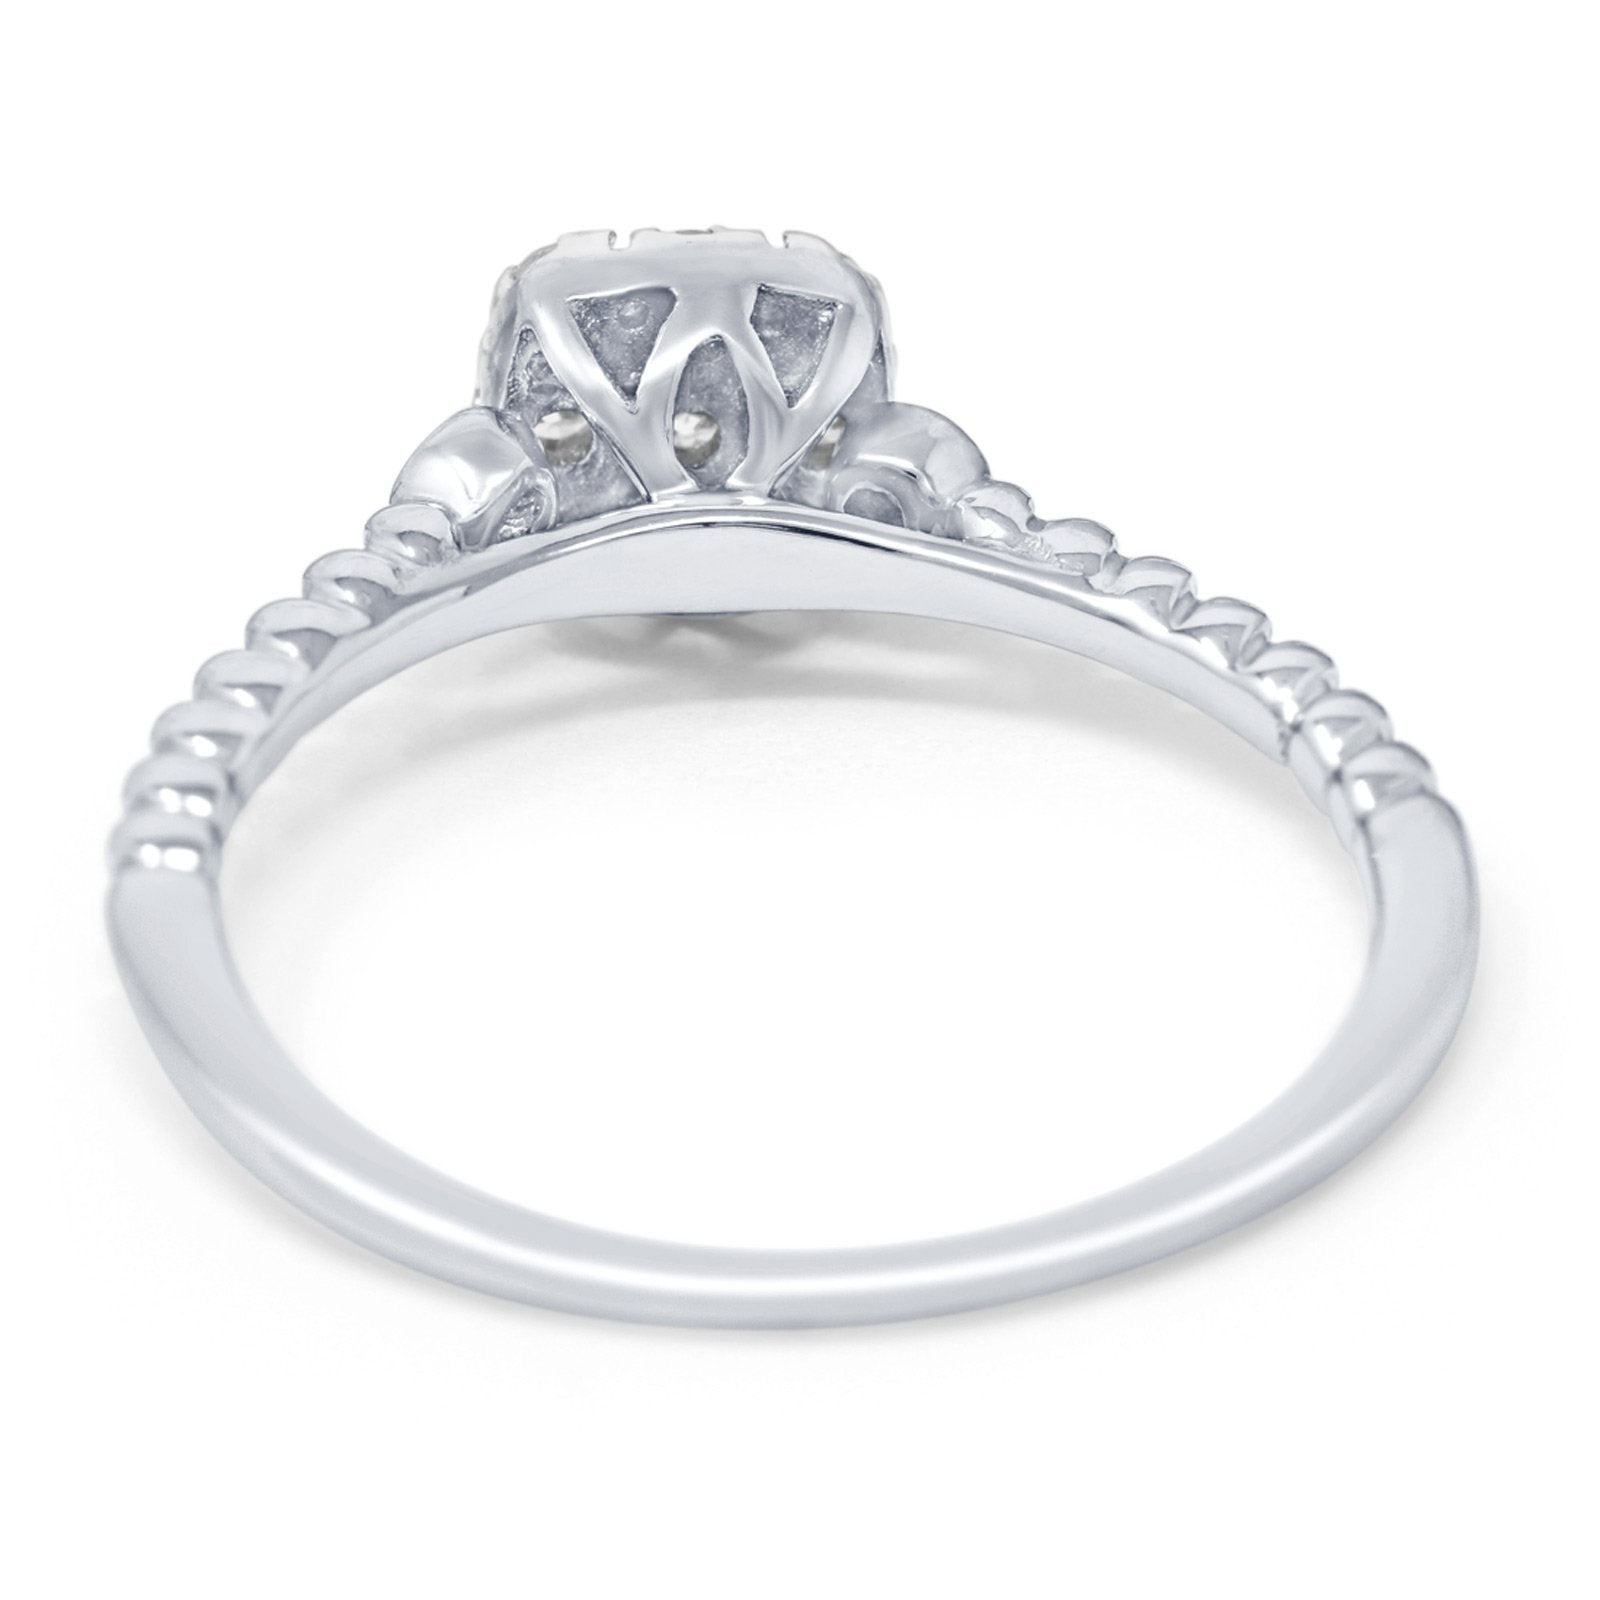 14K Gold 0.26ct Round 6.3mm G SI Diamond Engagement Wedding Promise Ring